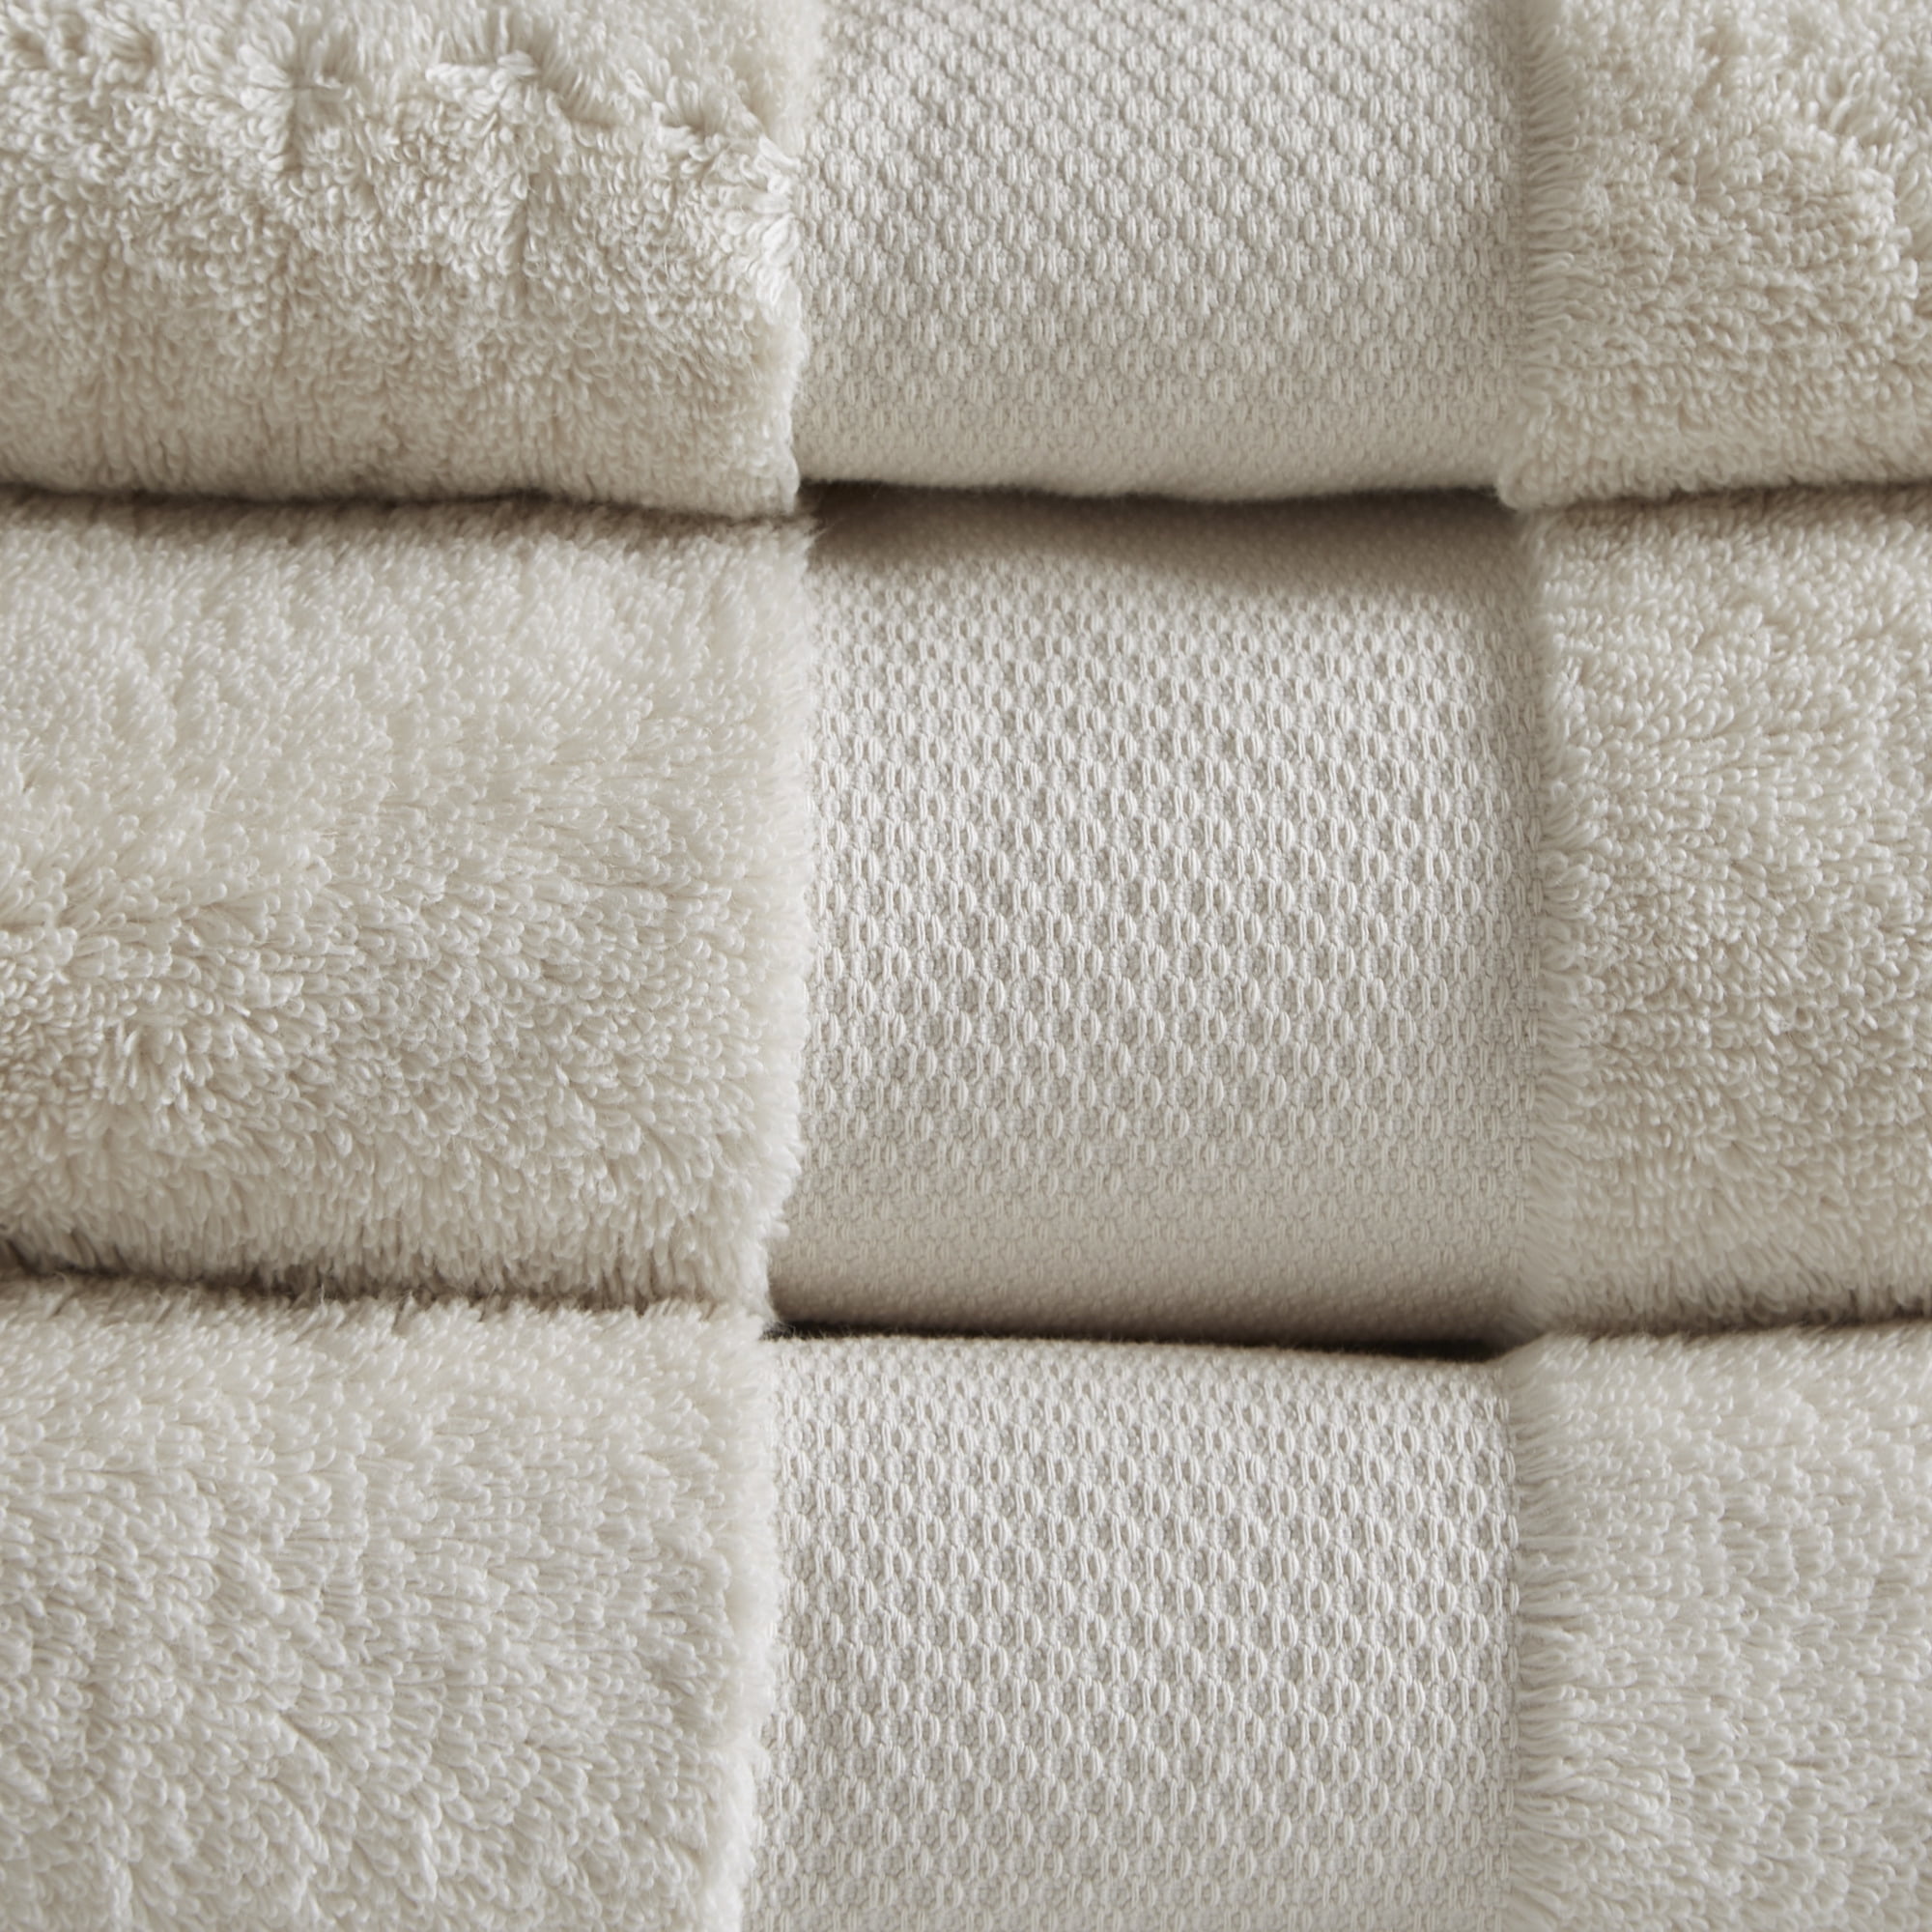 Home Essence Organic 6 Piece 100 Percent Cotton Towel Set 